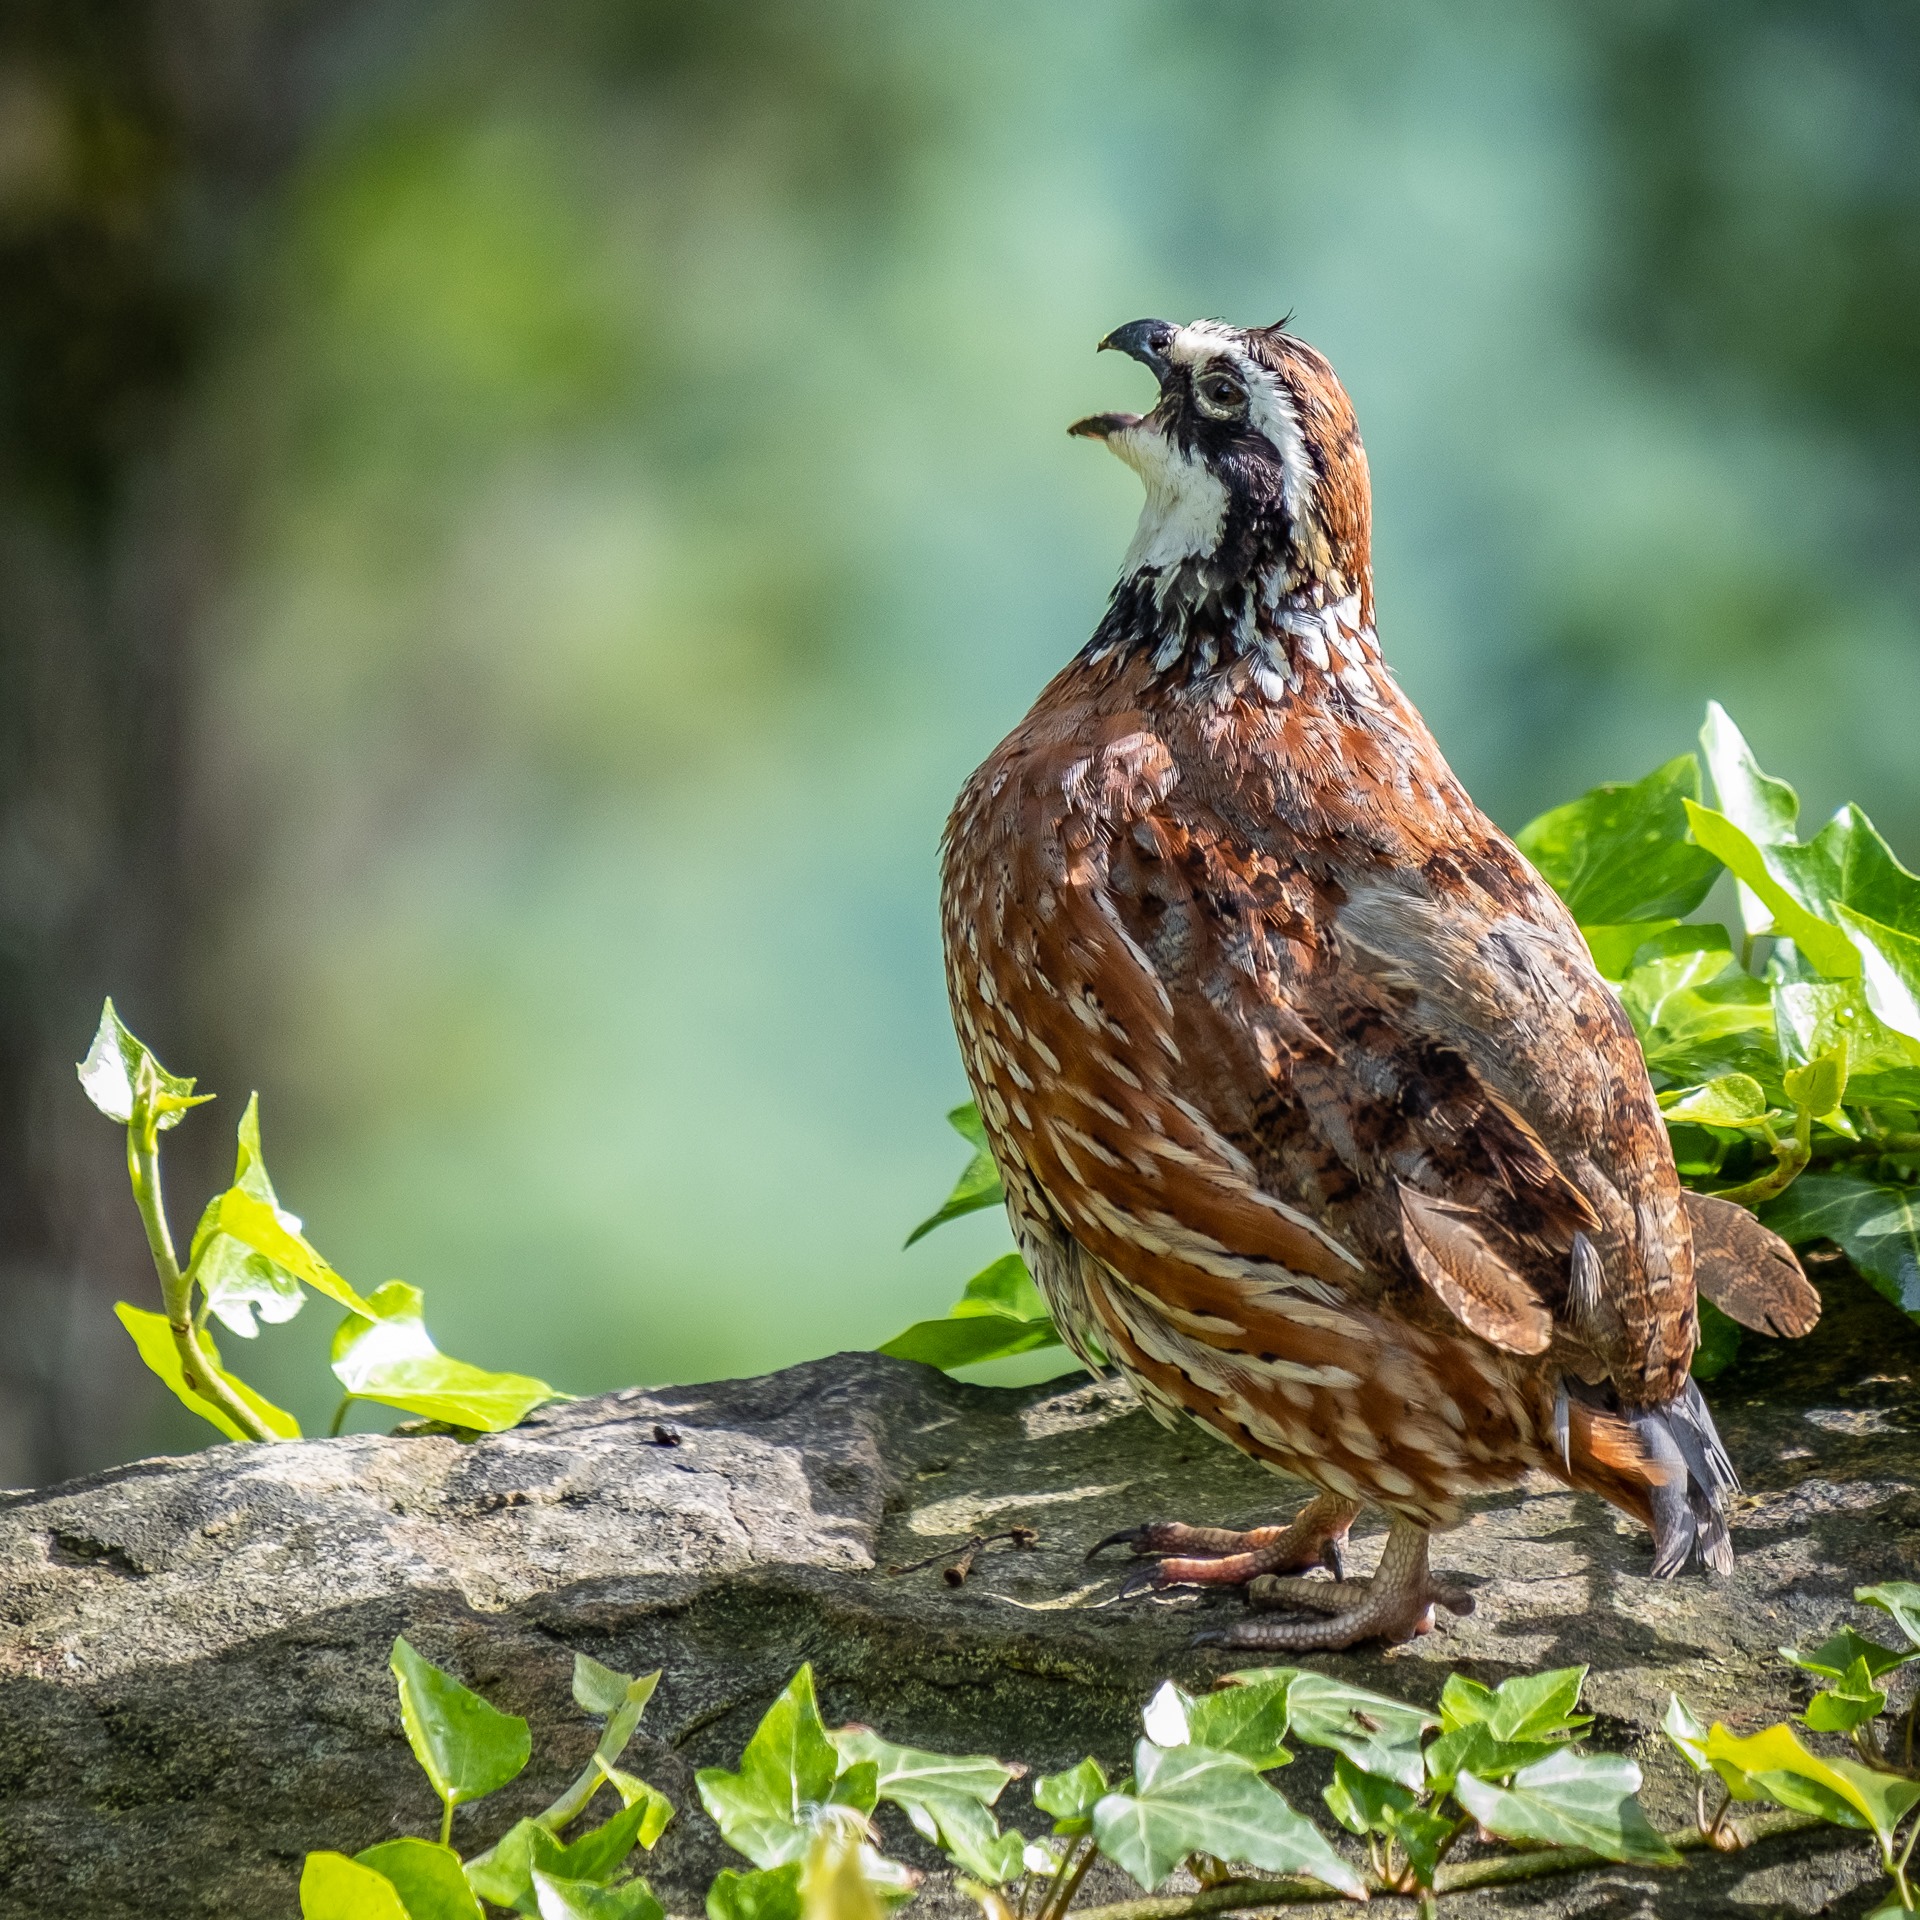 Bobwhite Quail Clark 5 ways to celebrate National Bird Day in "BIRDingham" (15 photos)